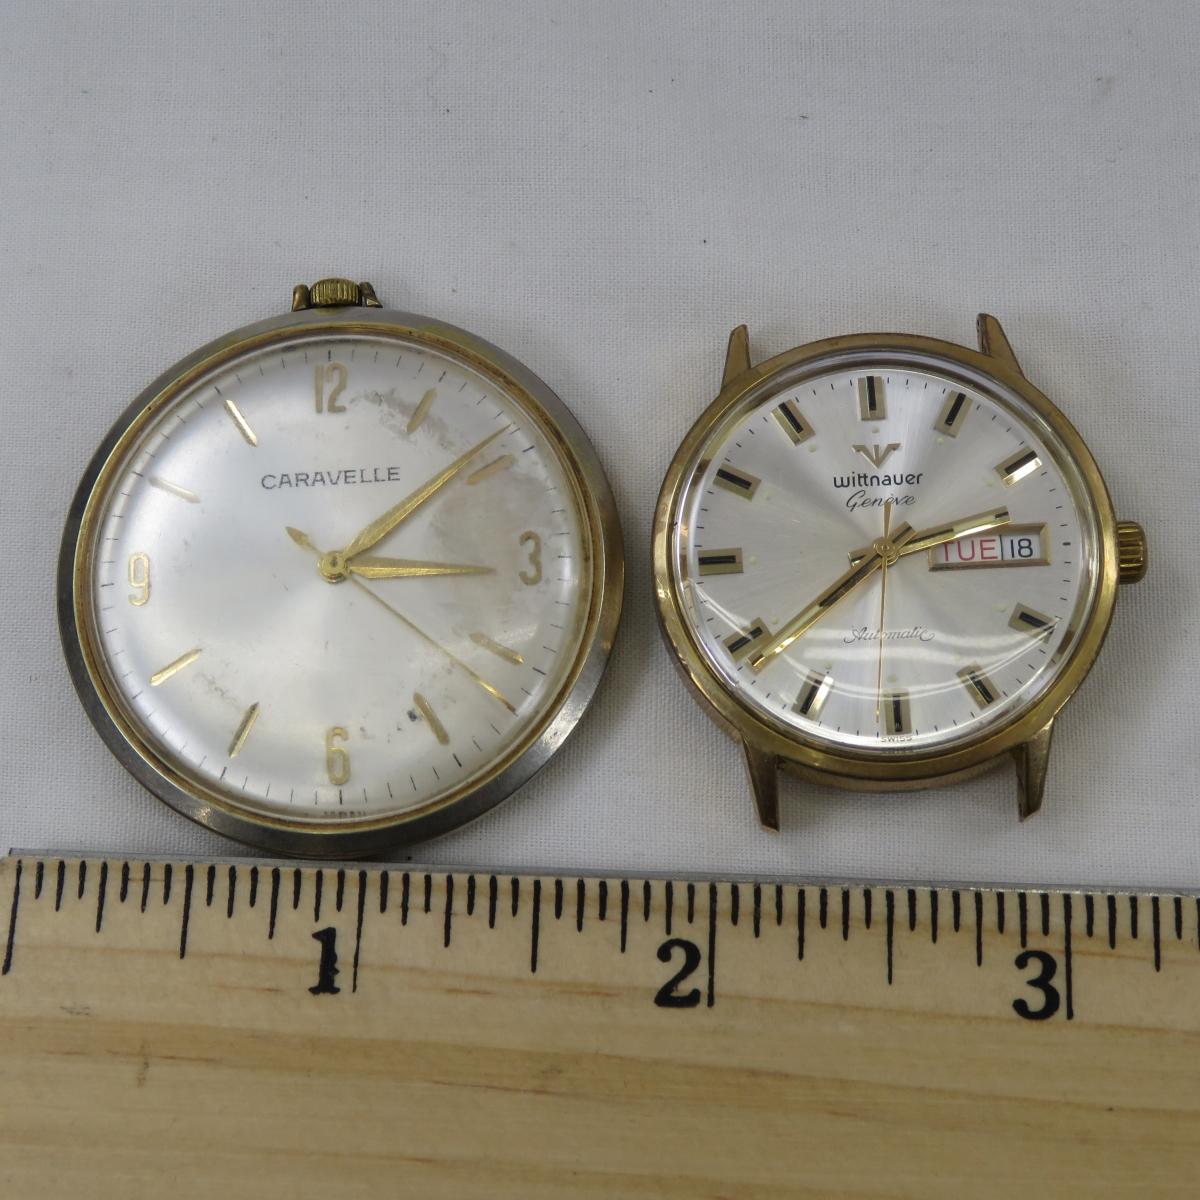 Vintage Caravelle Pocket Watch & Wittnauer Watch